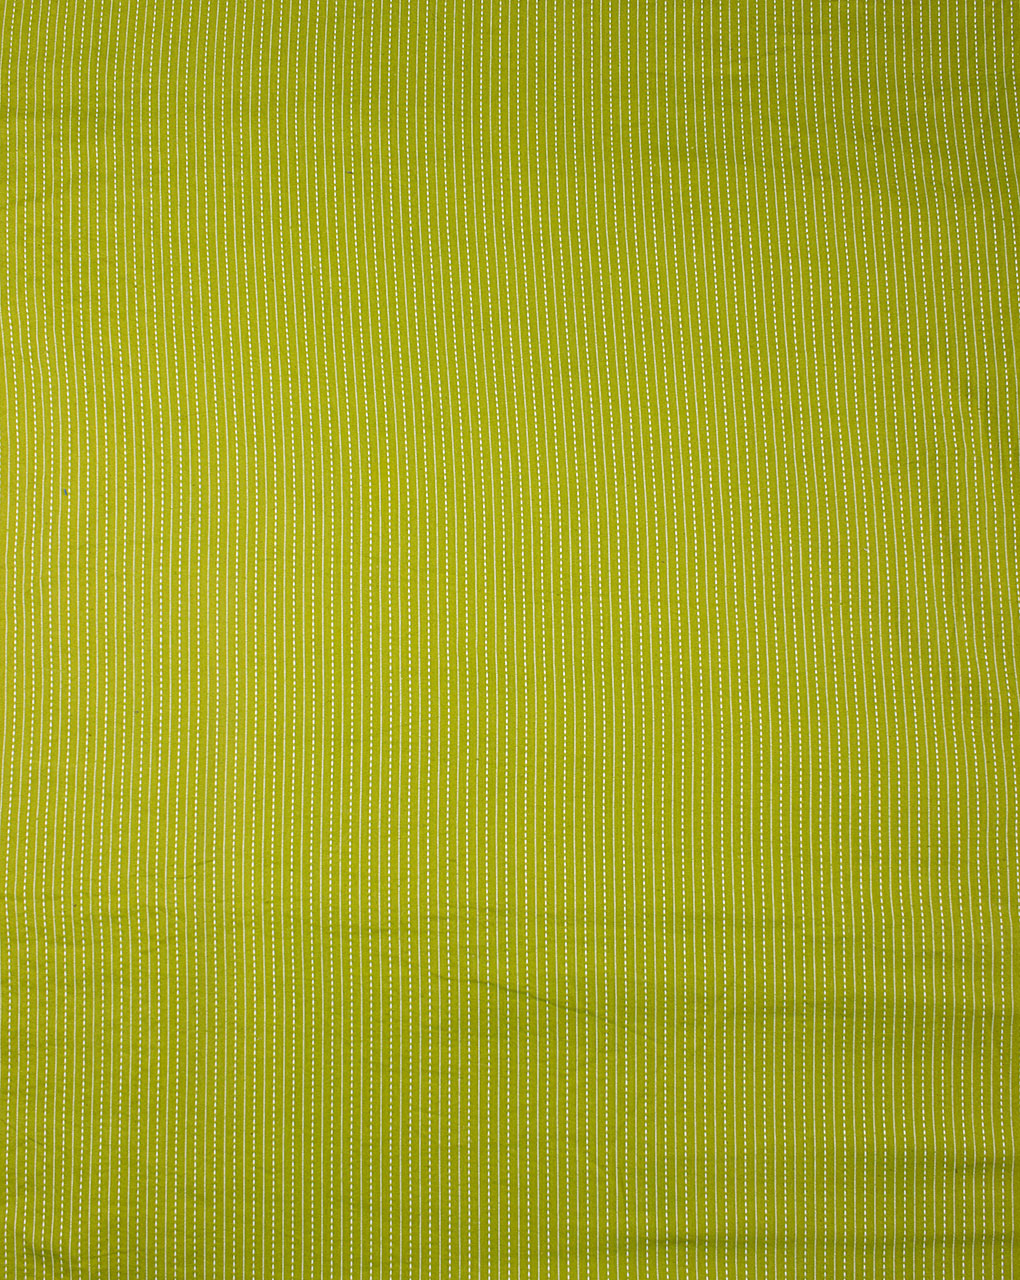 Green Plain Kantha Cotton Fabric - Fabriclore.com